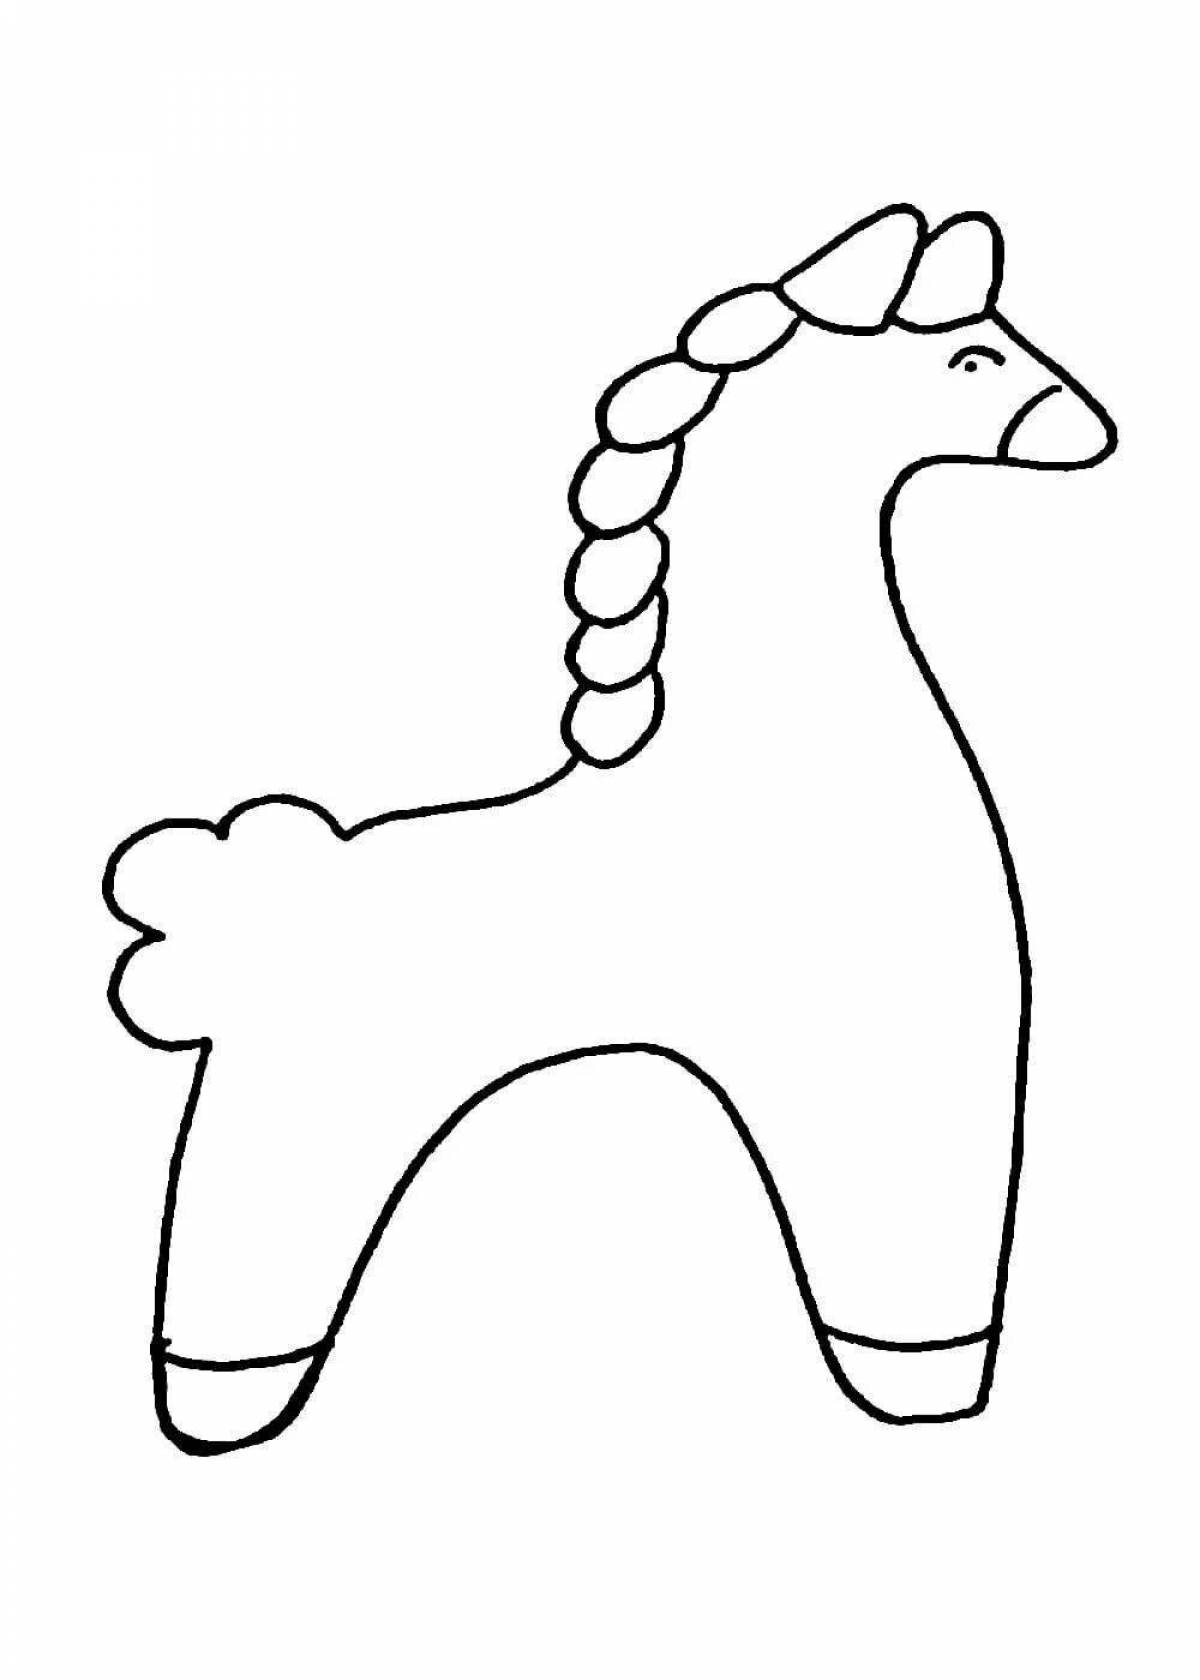 The cheerful Filimonov horse